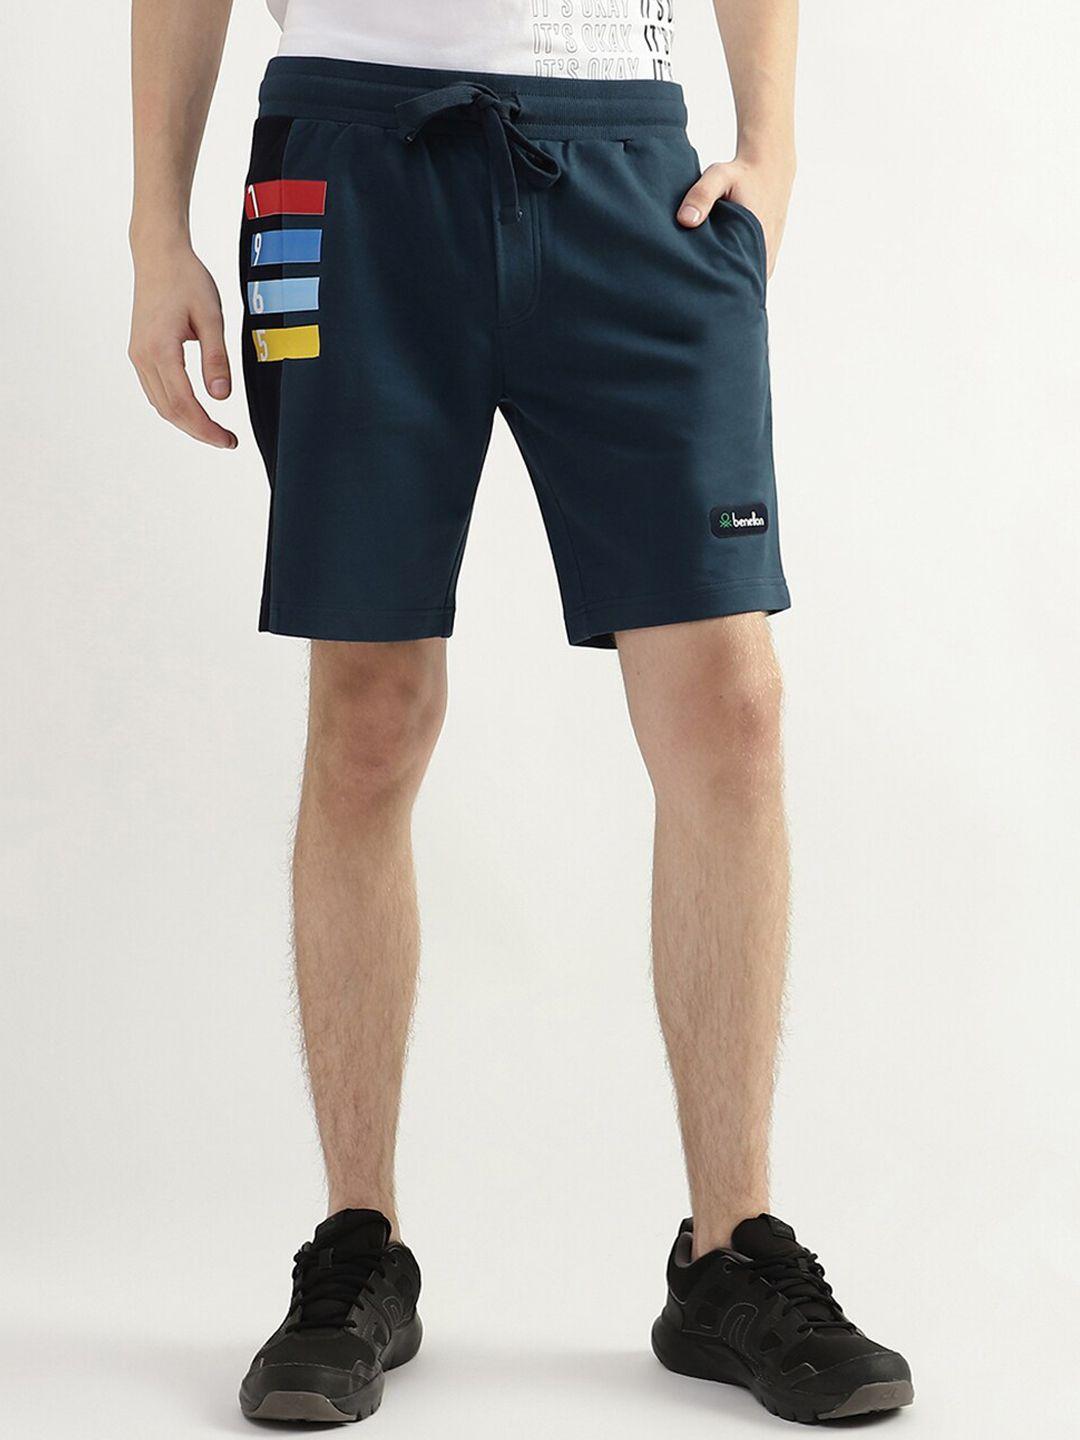 united colors of benetton men cotton sports shorts